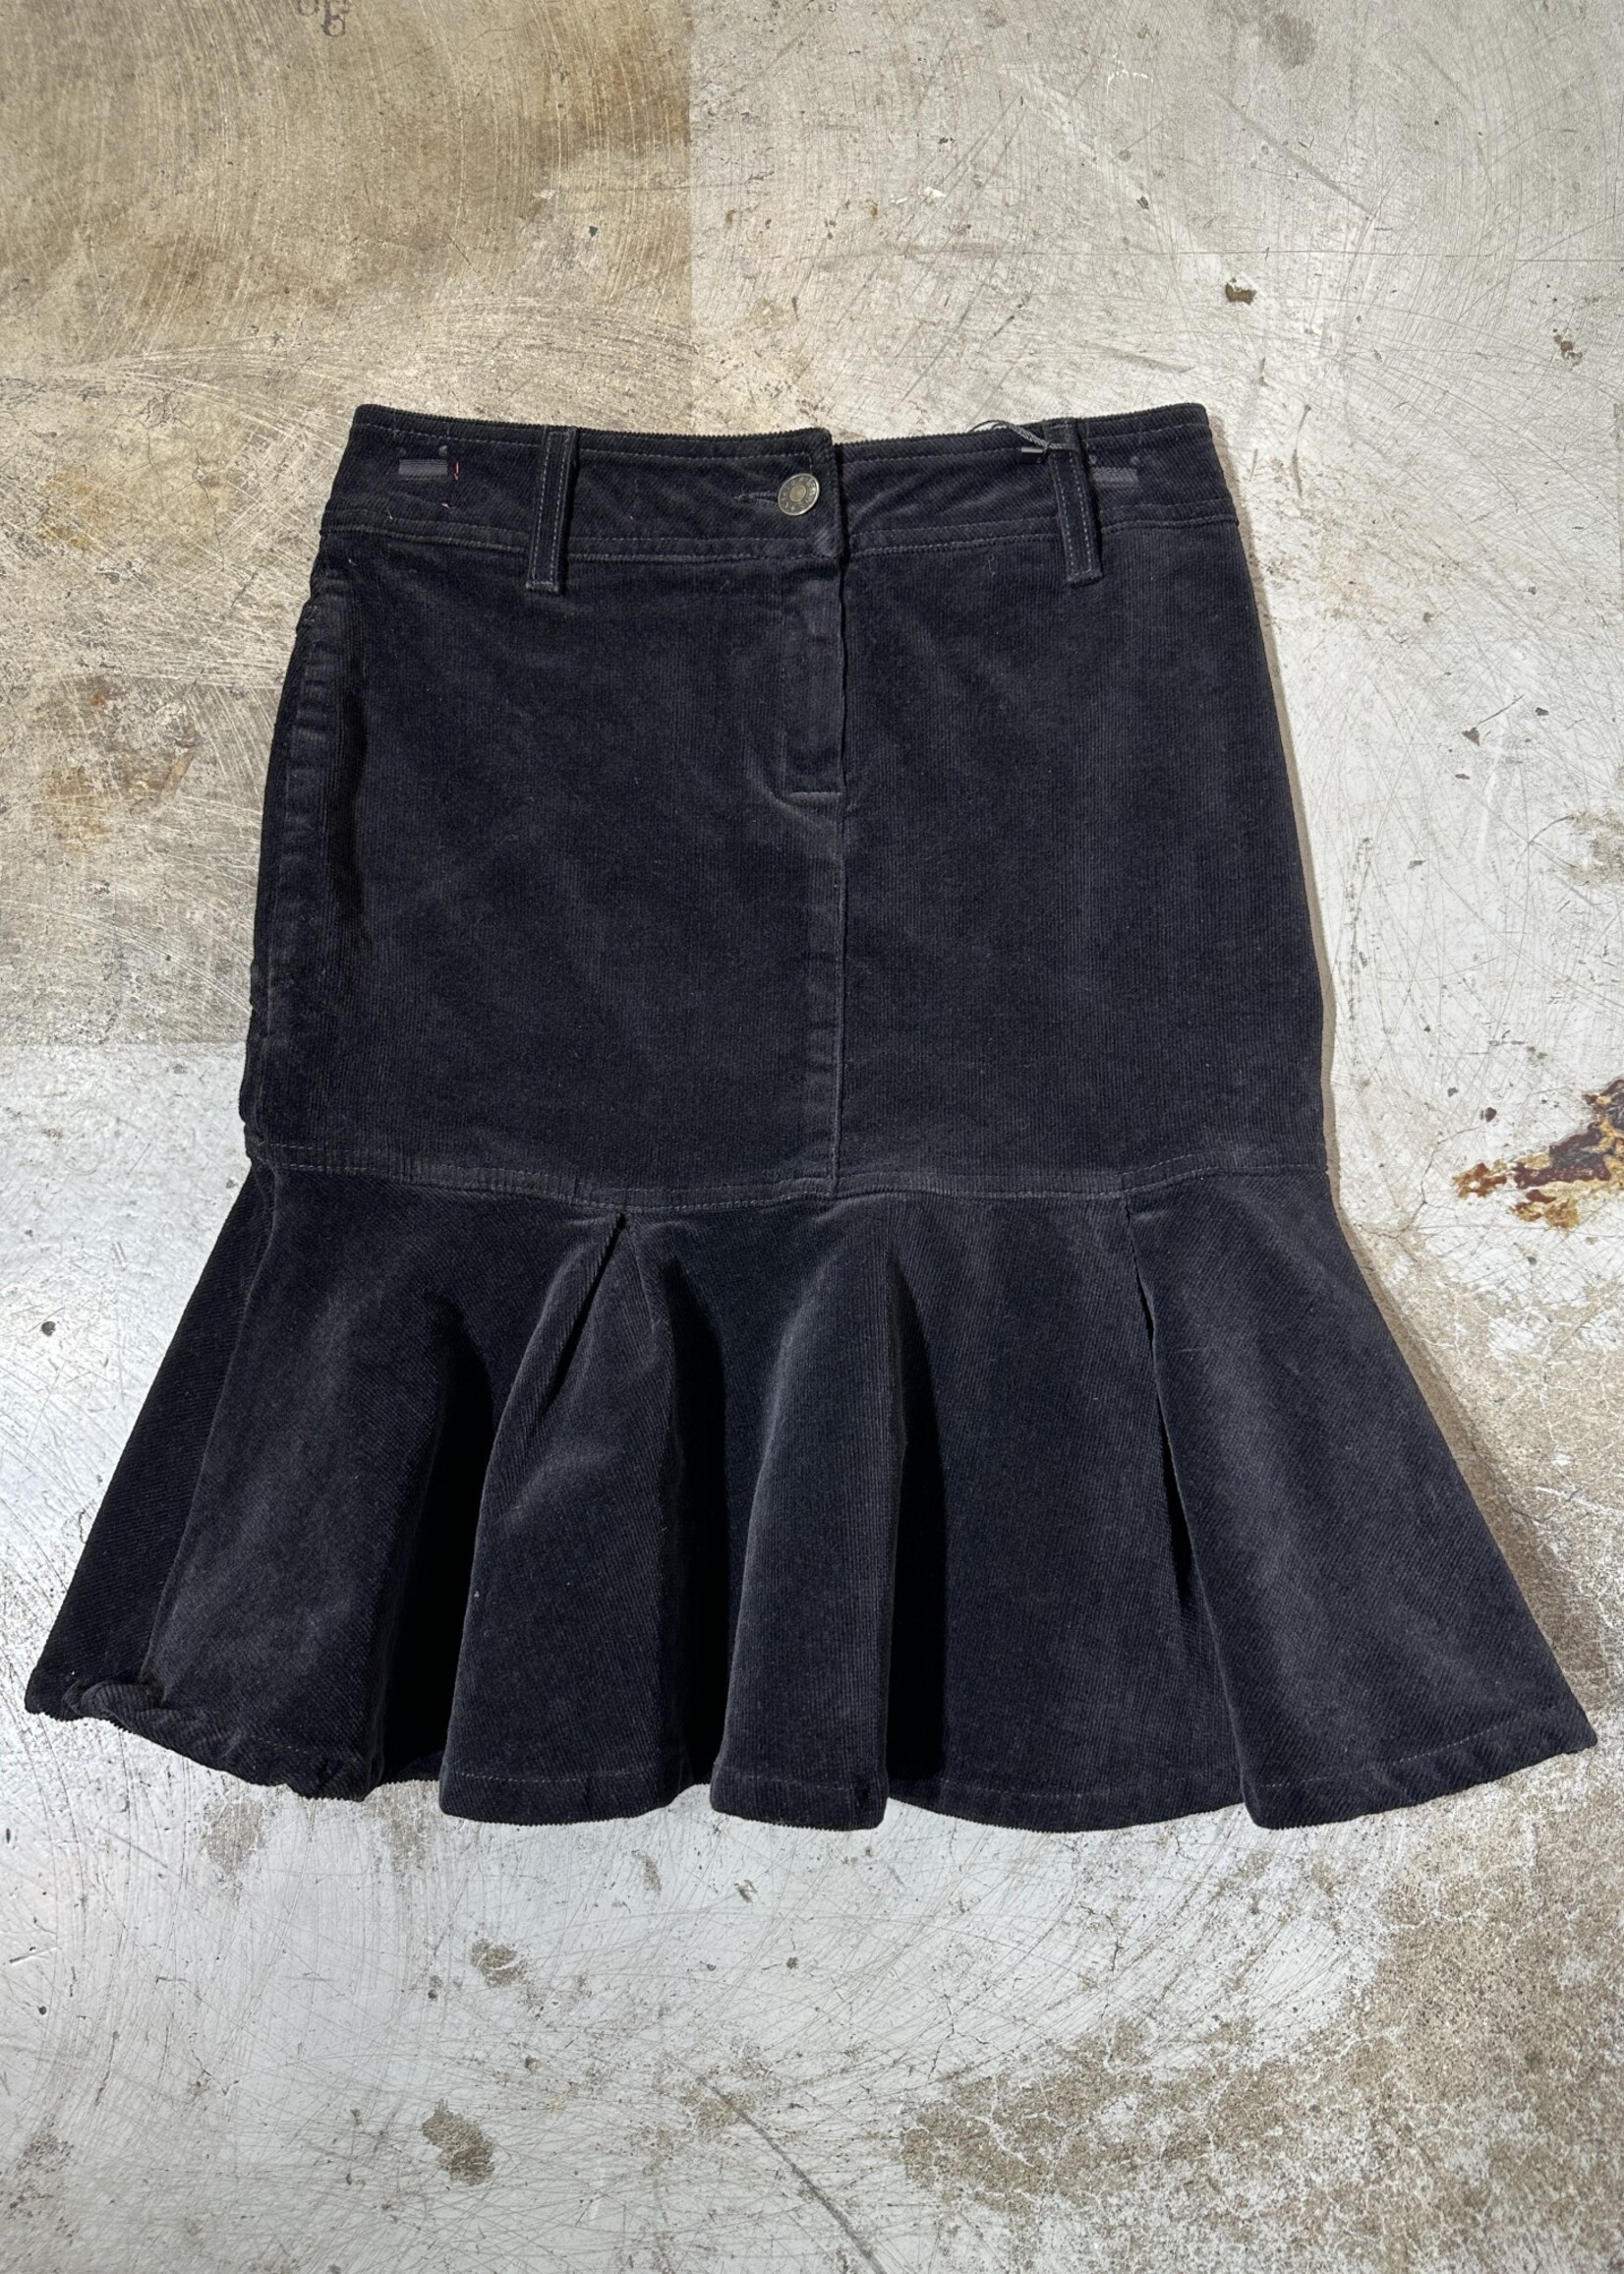 Cielo Black Cord Skirt 25"